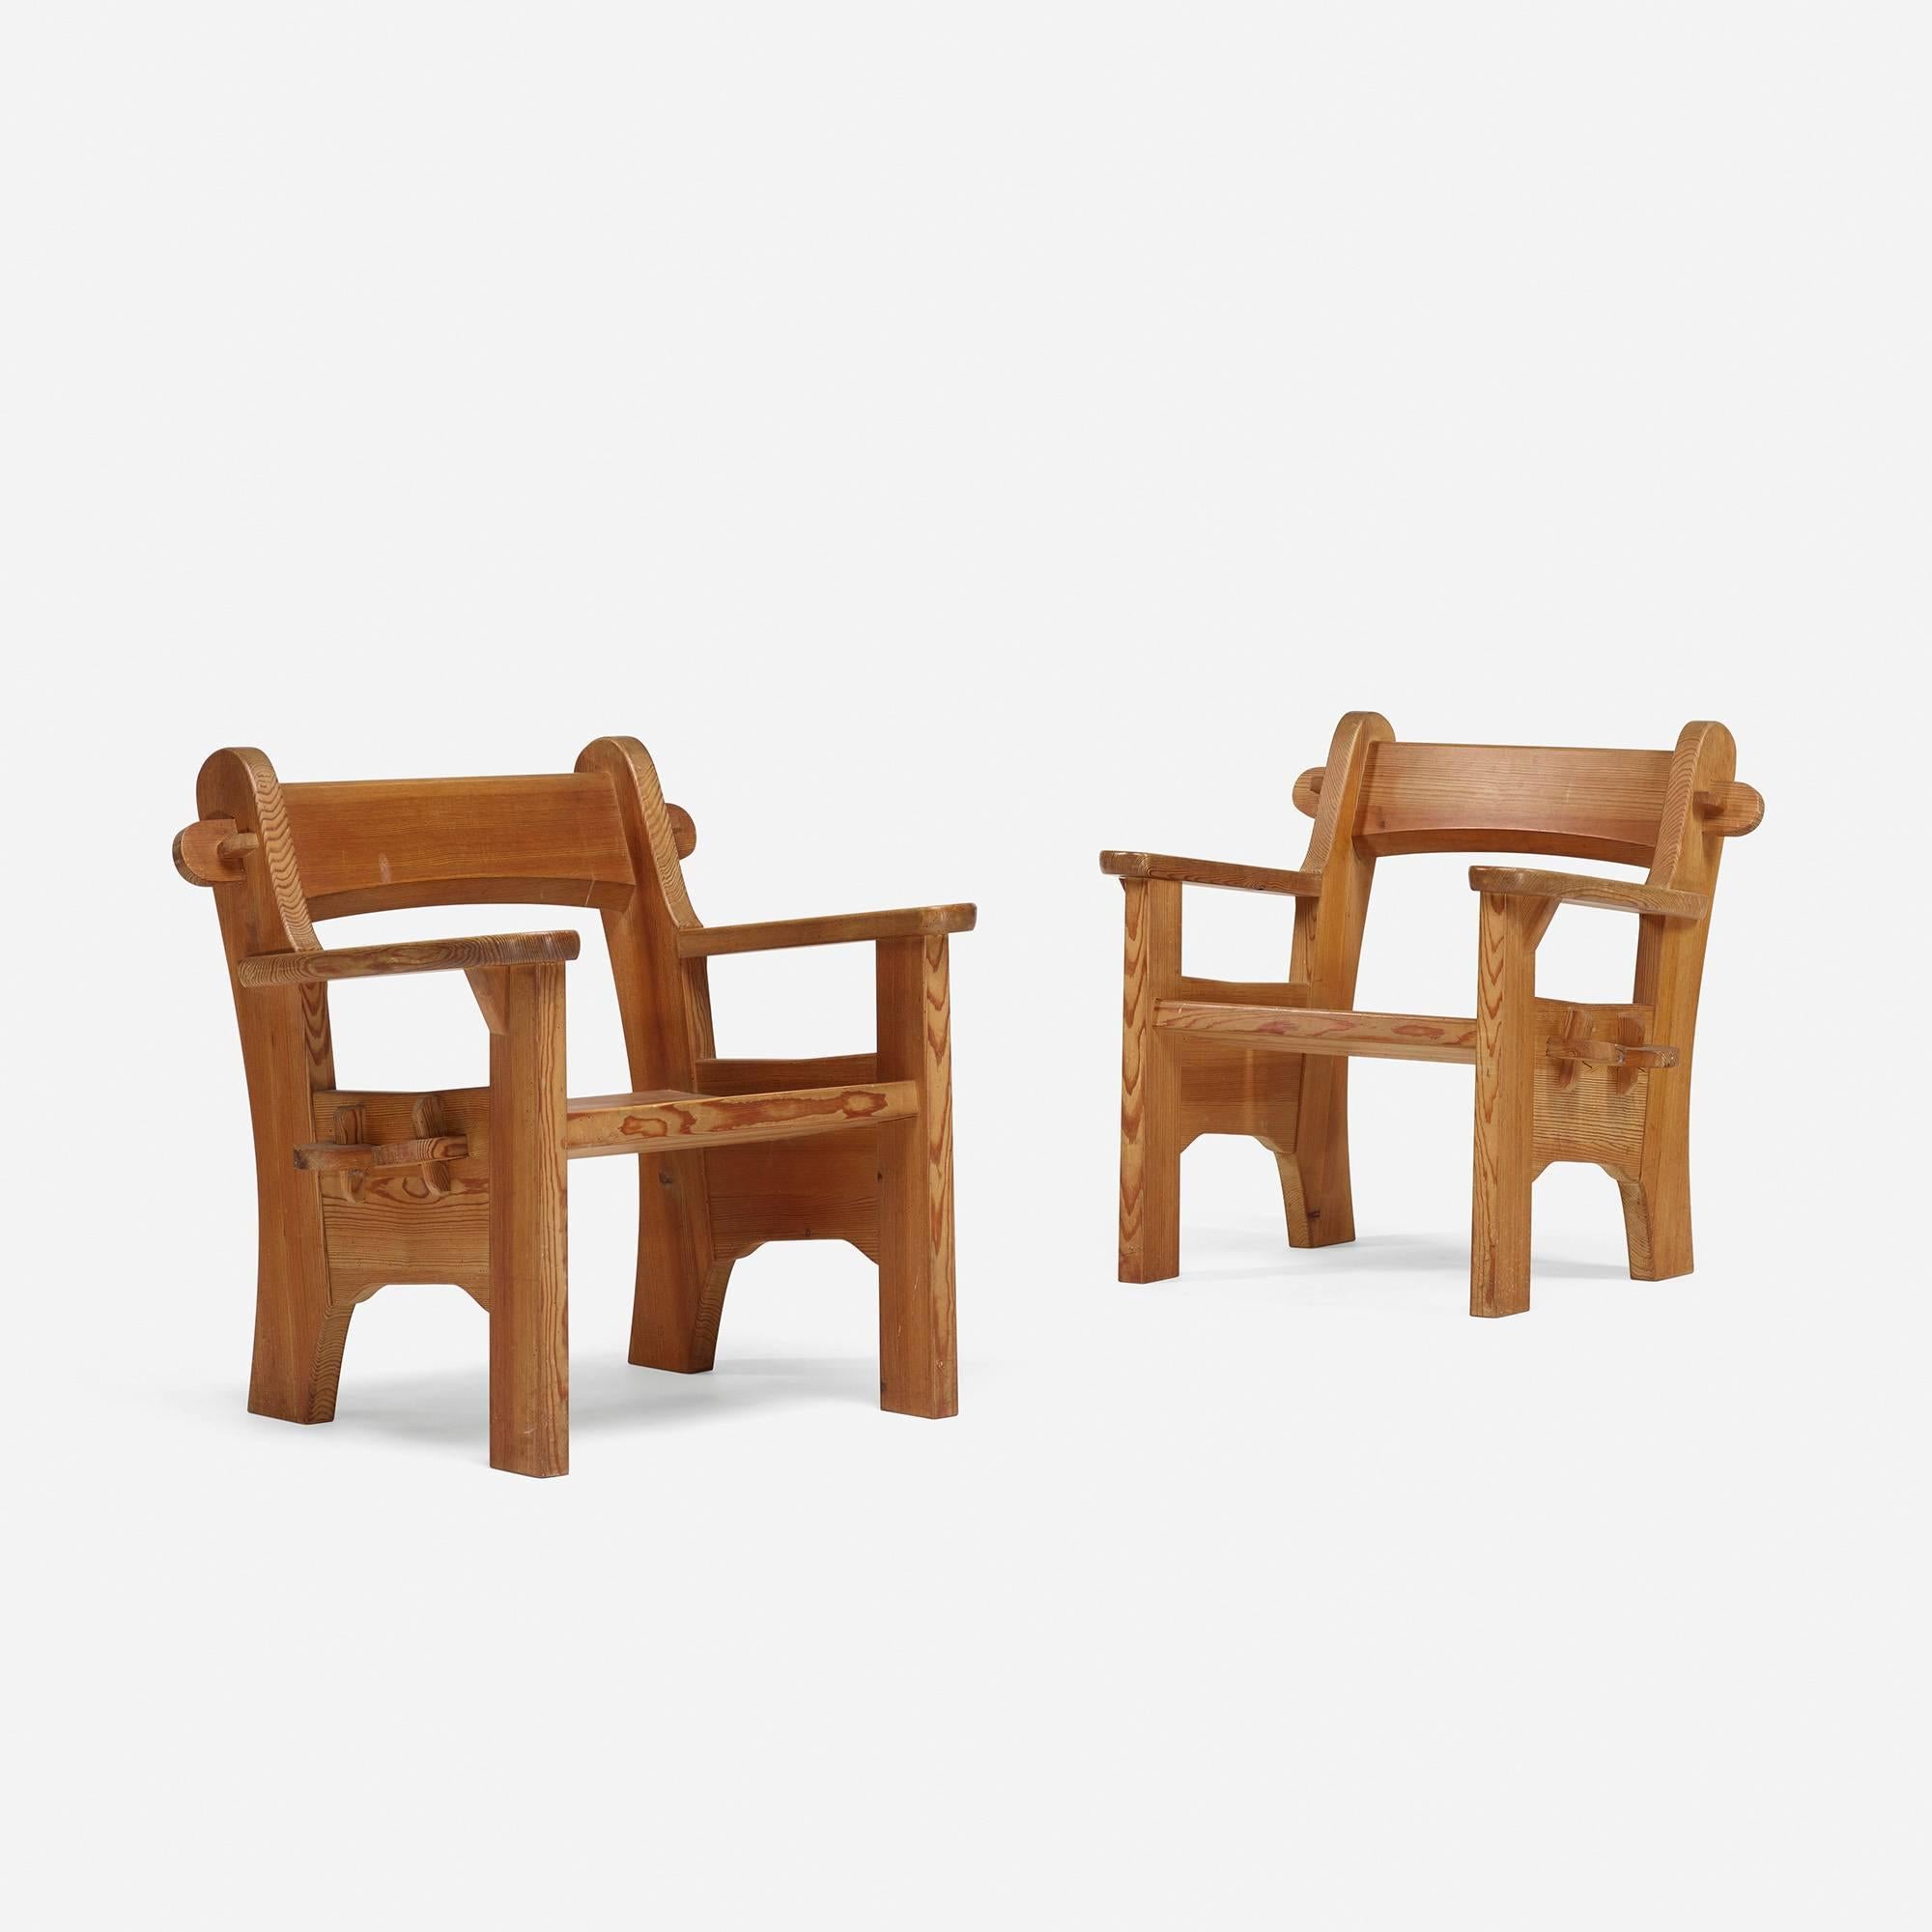 Berga lounge chairs, pair by David Rosén for Nordiska Kompaniets Verkstäder.